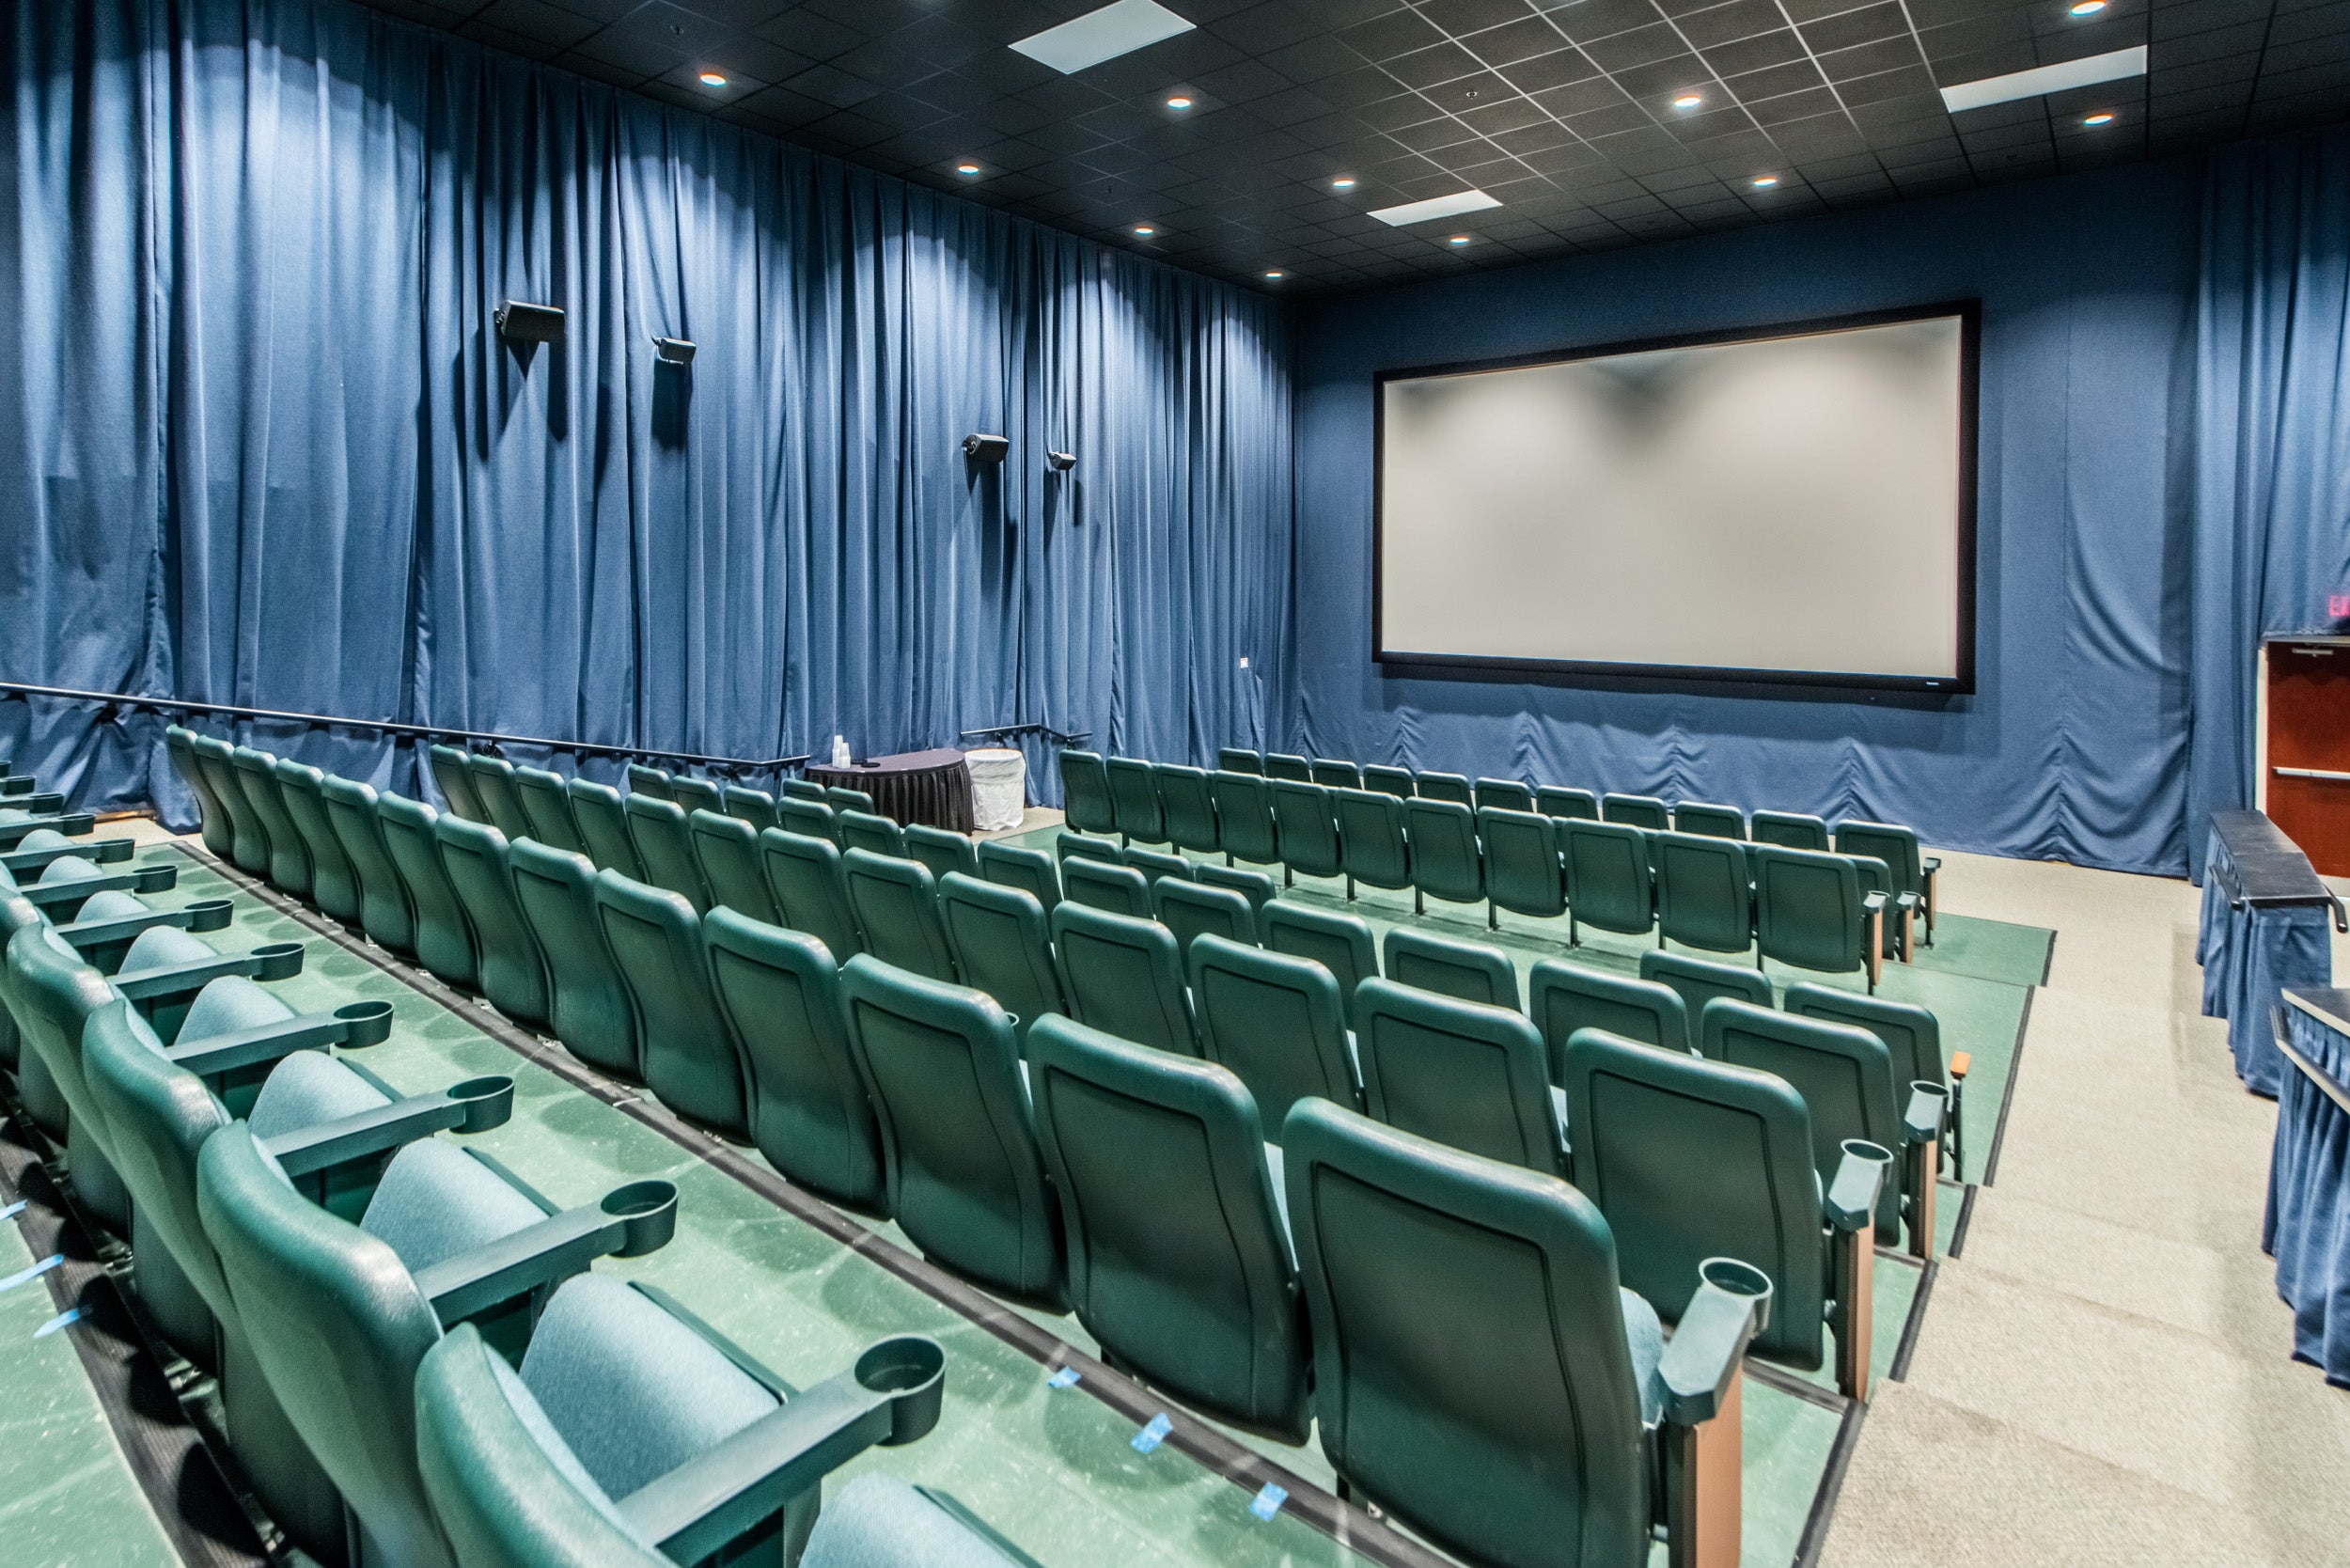 Majestic+Movie+Theater+wstadium+seating